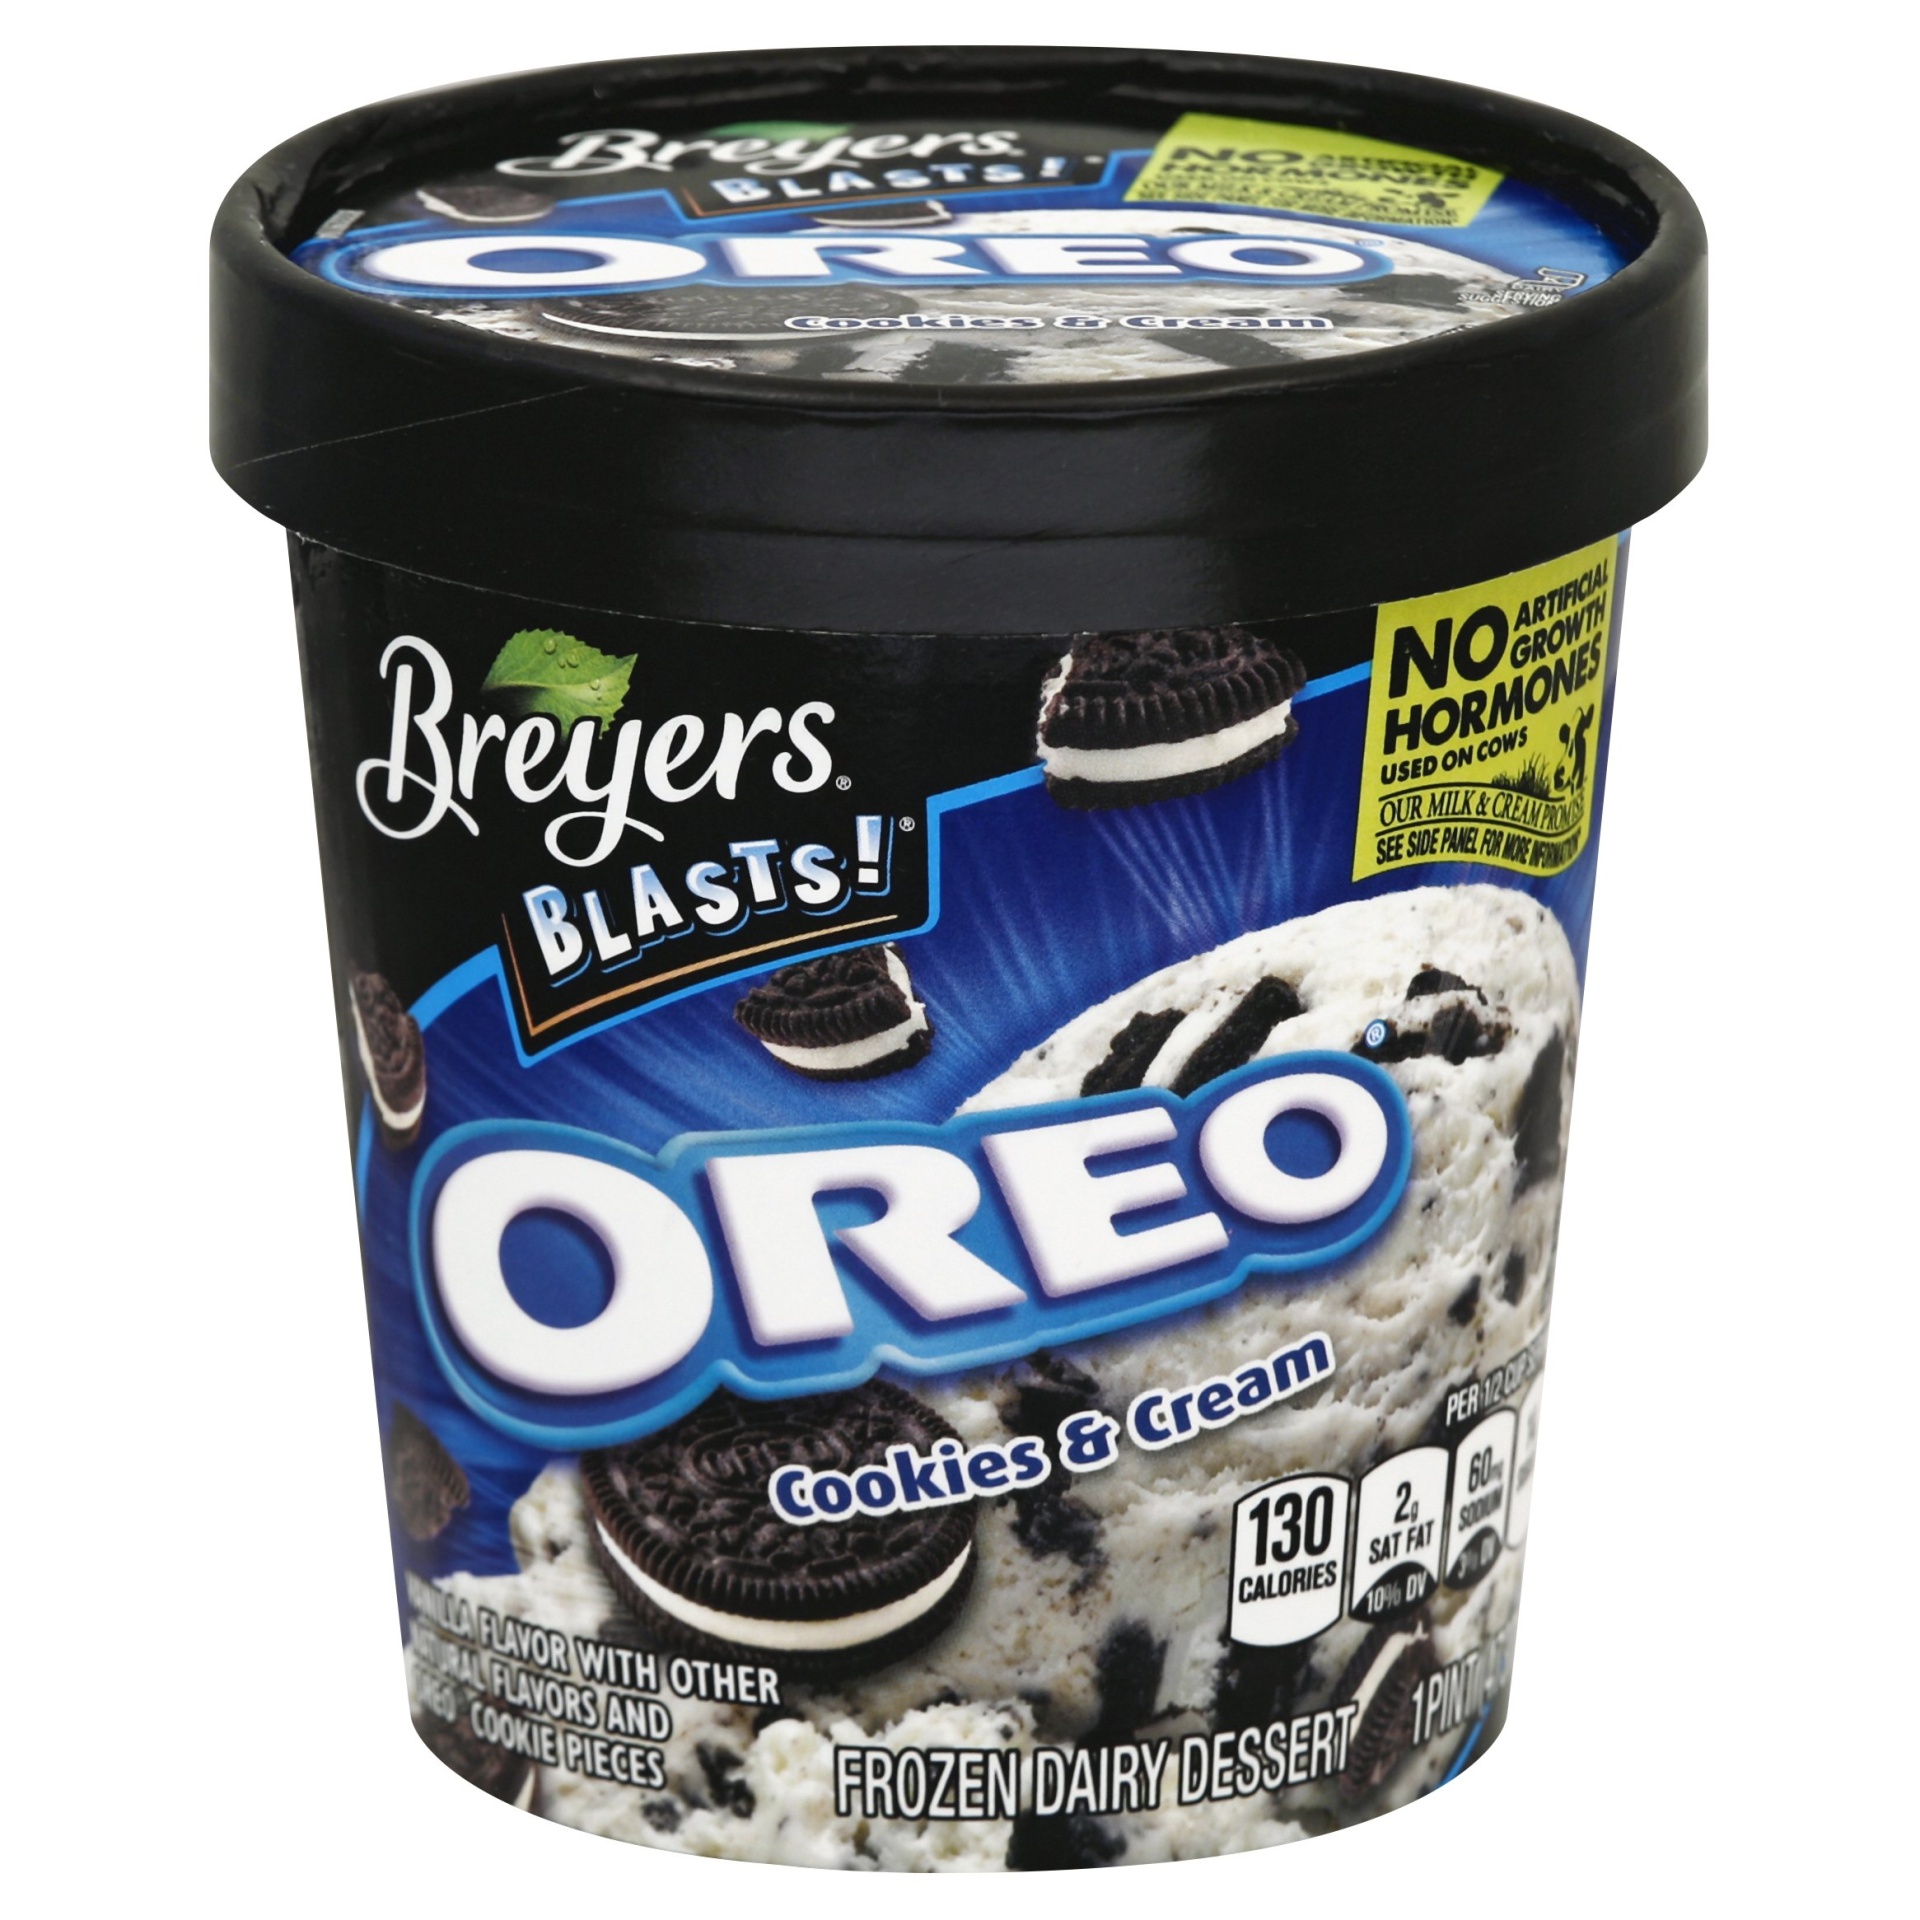 slide 1 of 1, Breyer's Blasts! Oreo Cookies & Cream Ice Cream, 16 fl oz